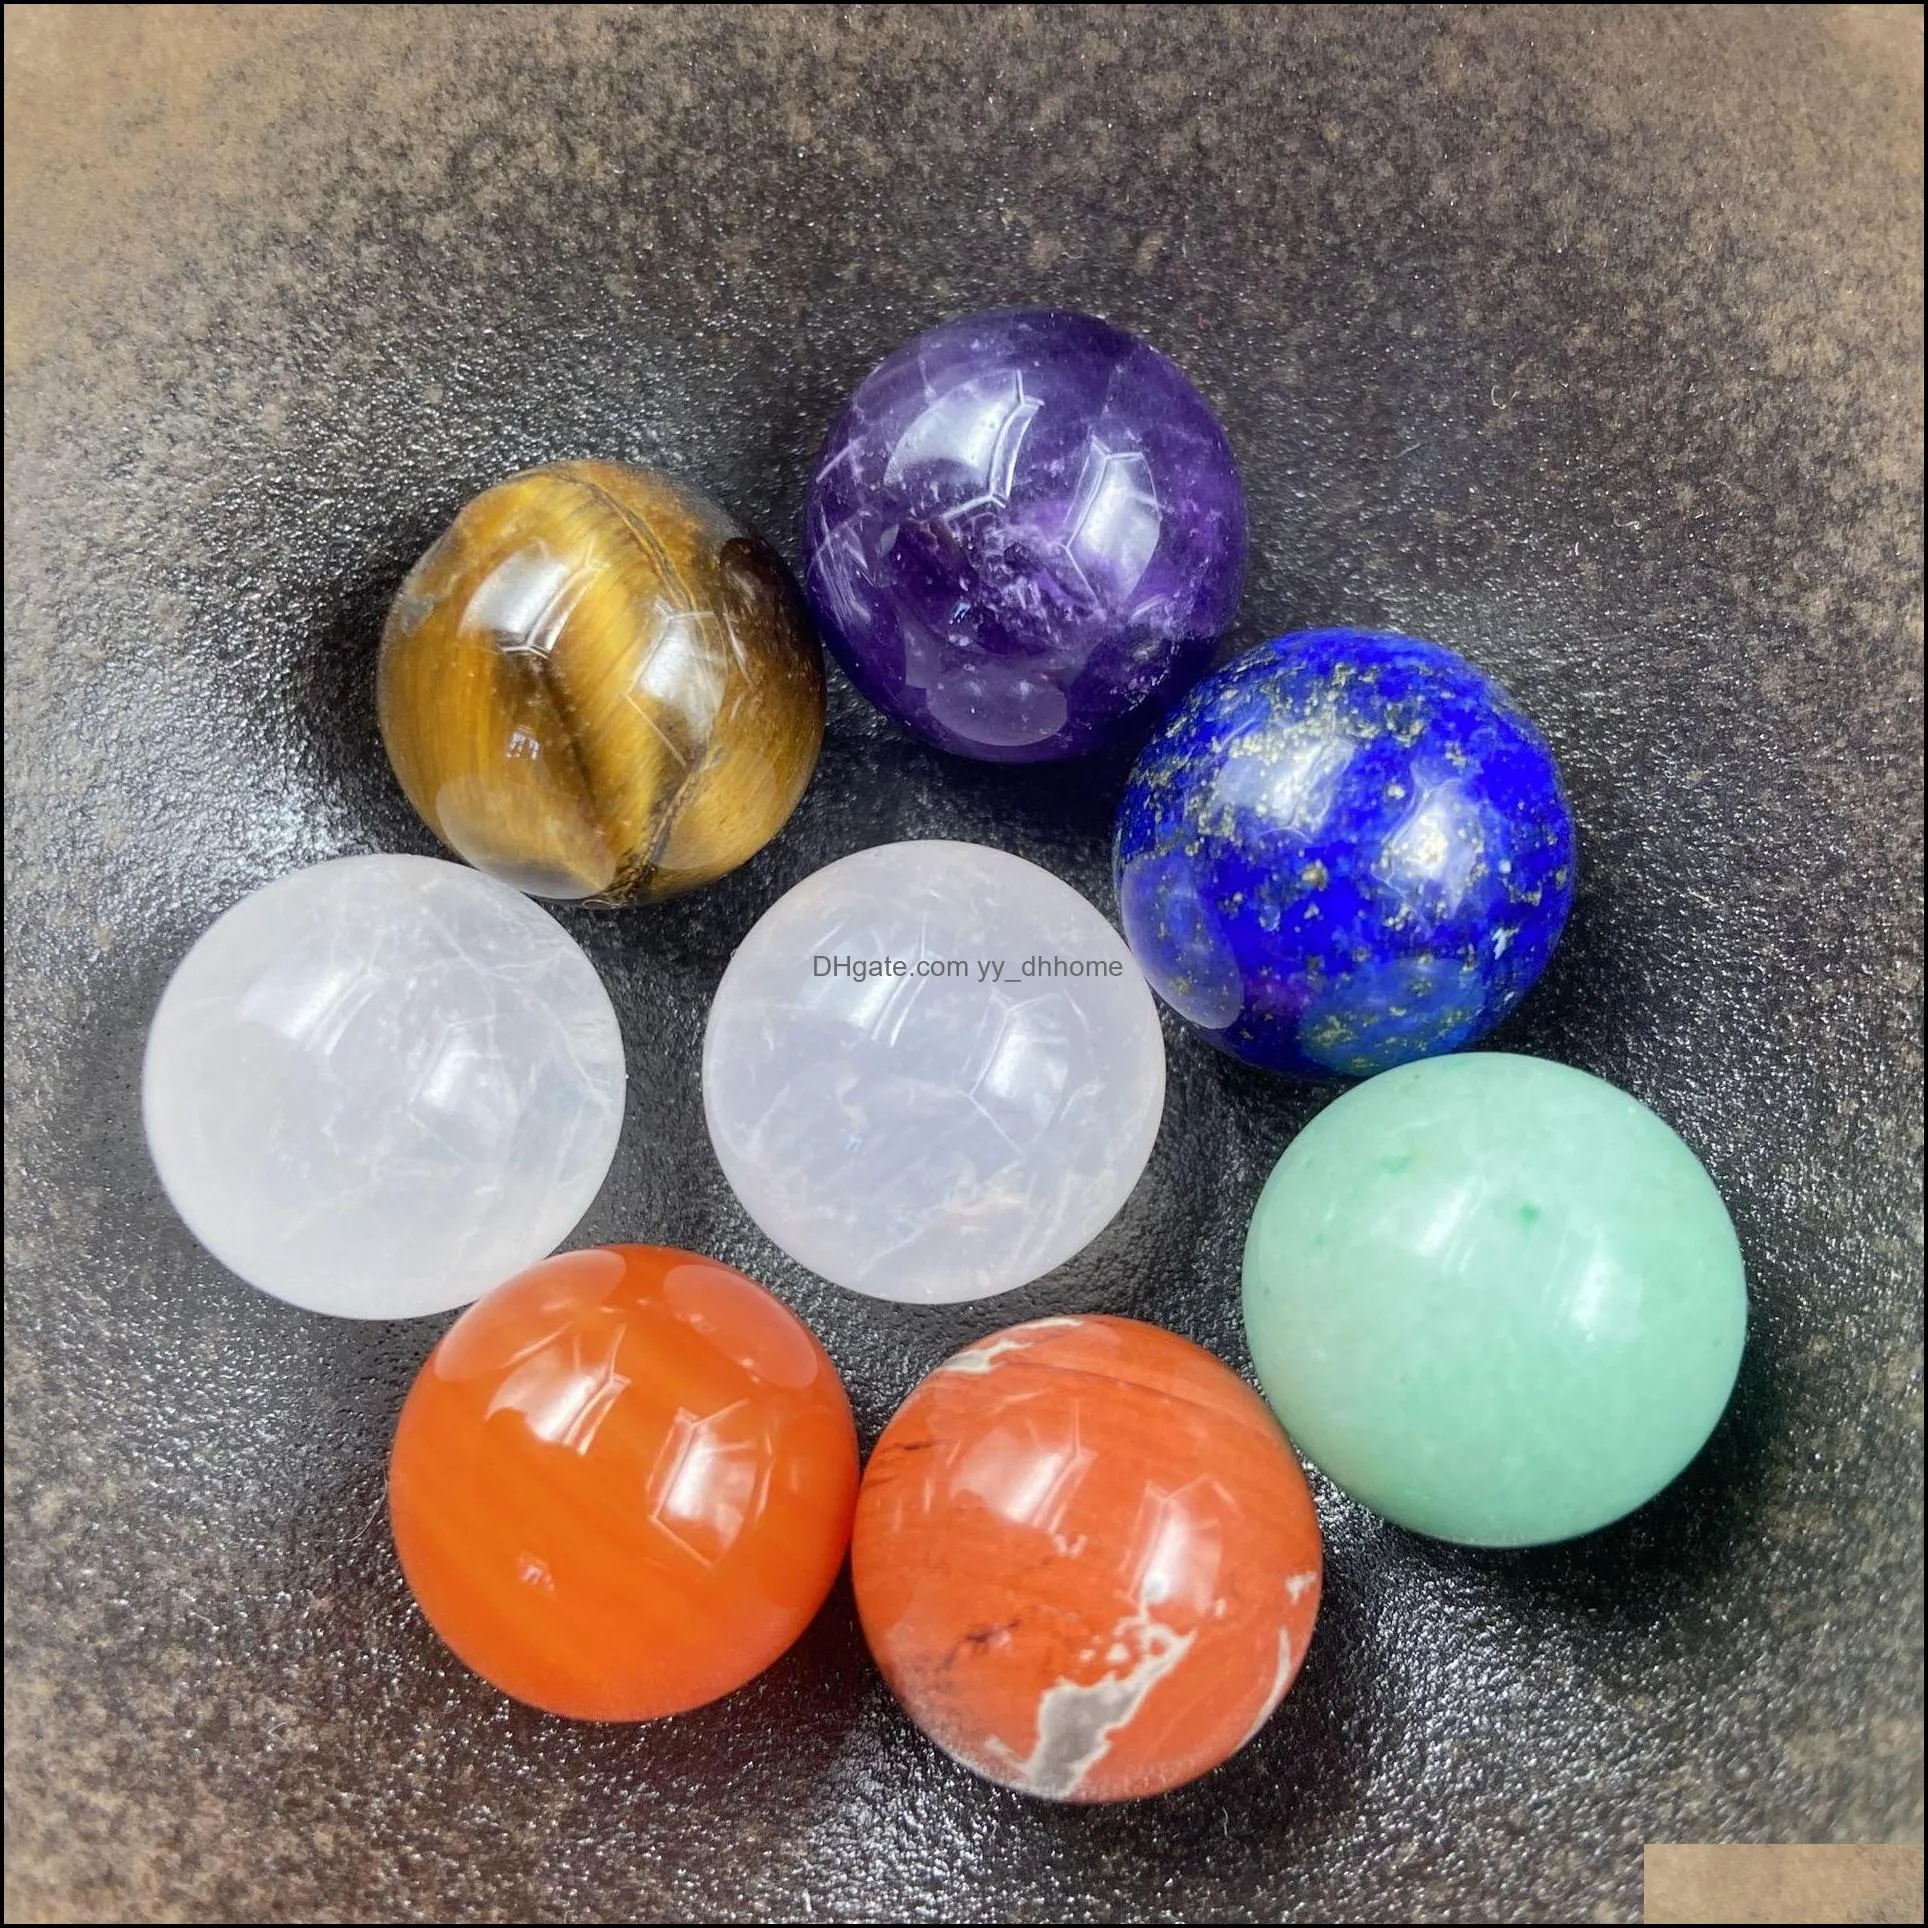 16mm round ball 7 chakra set reiki natural stone crystal stones ornaments quartz yoga energy bead chakra healing art craft yydhhome